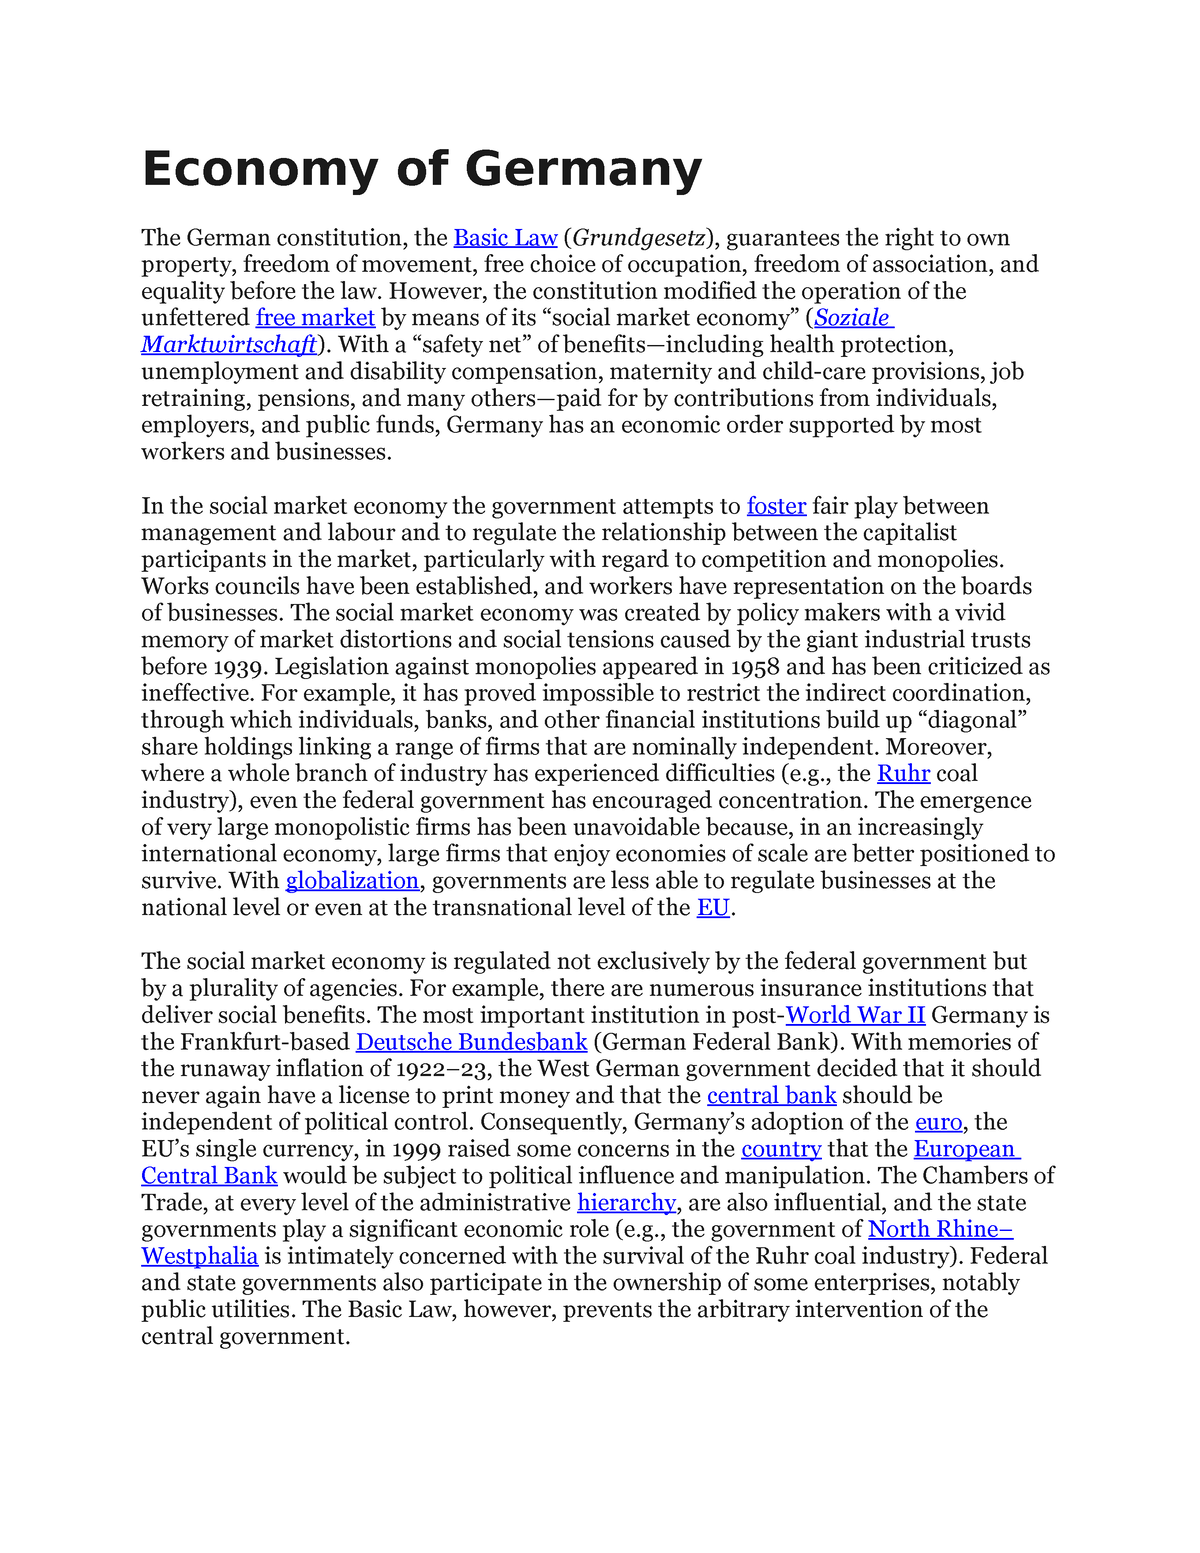 economy of germany essay in english